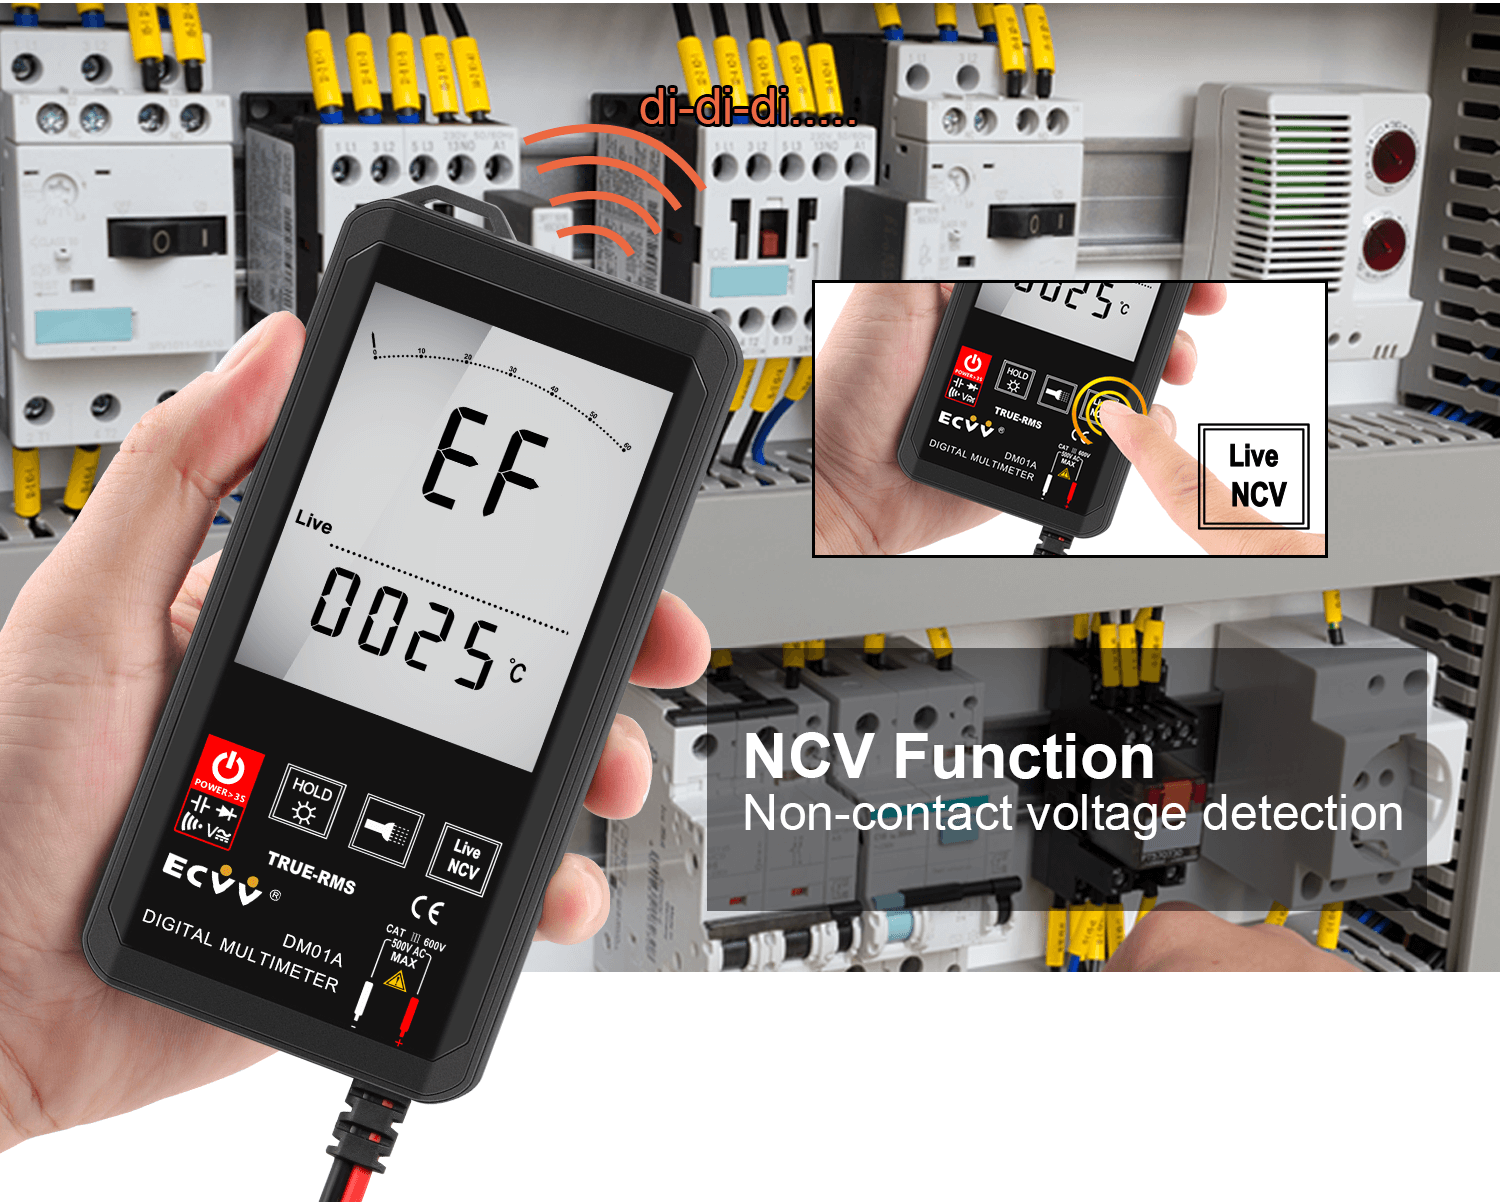 ECVV Touch Screen Auto Recognition NCV Handheld Digital Multimeter DM01A - 9